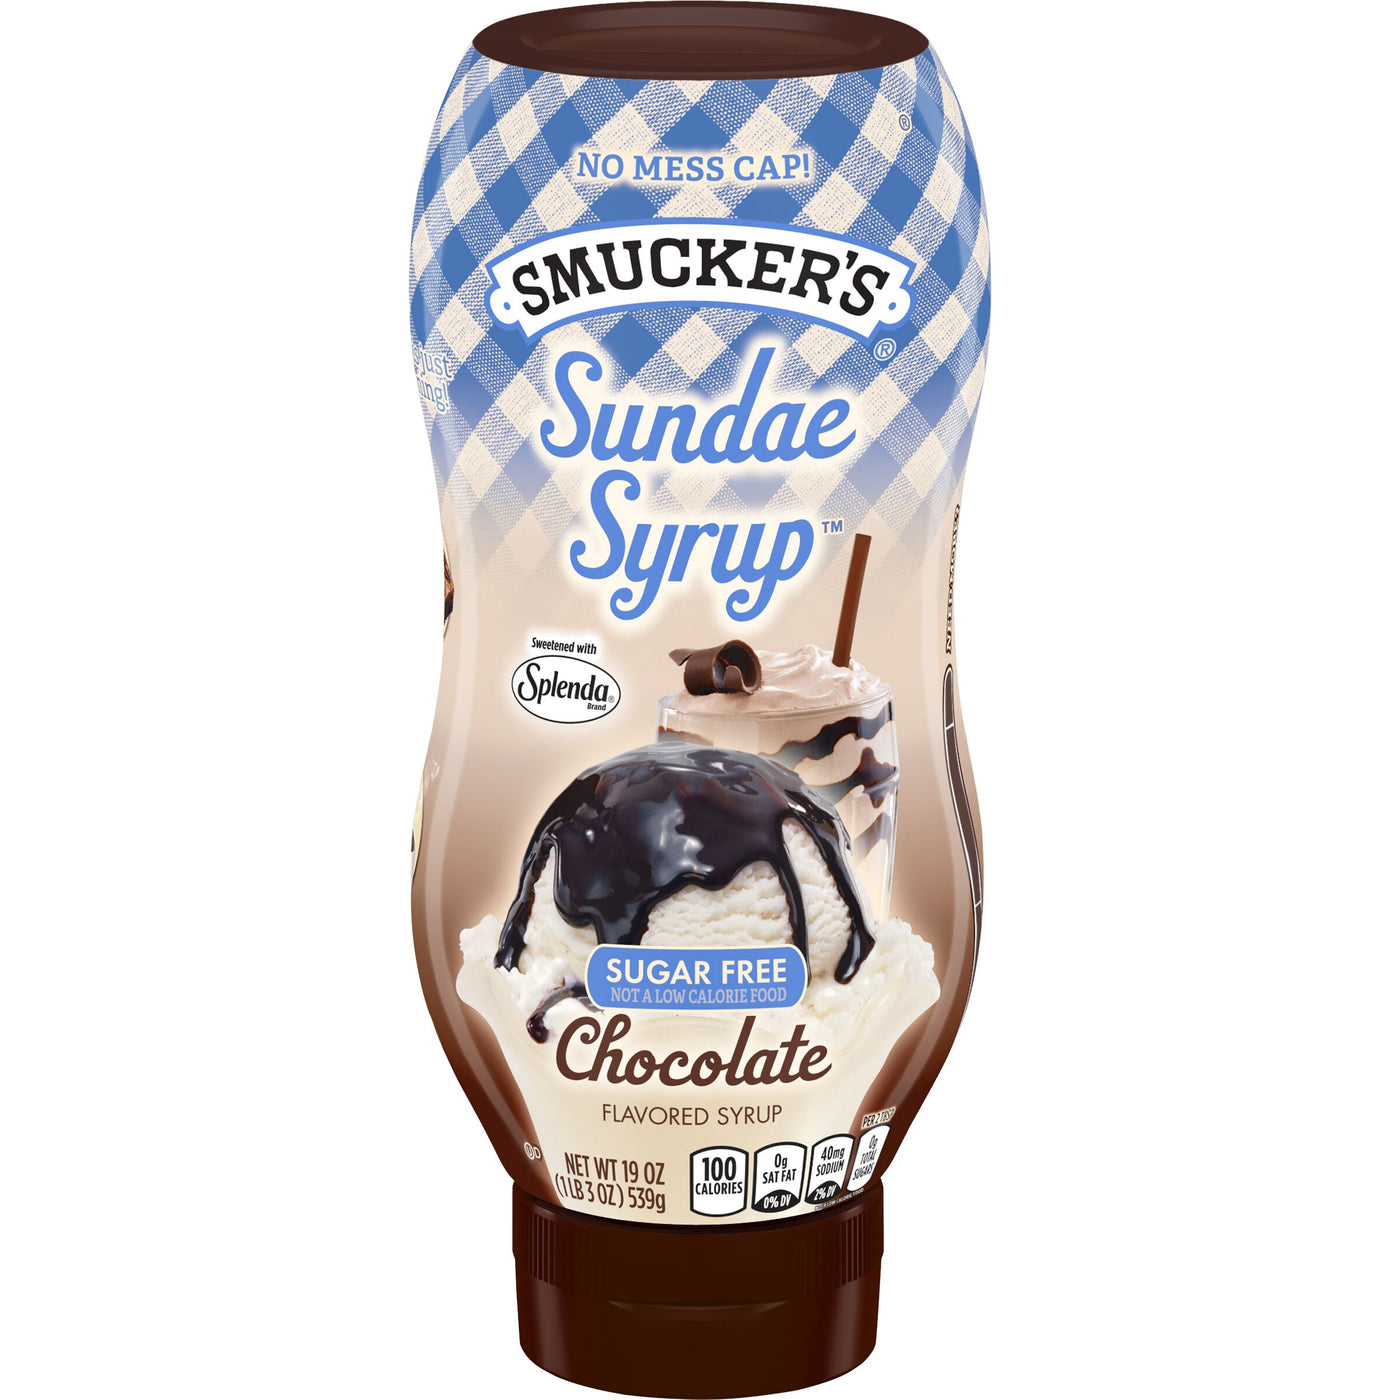 Smucker's Sundae Syrup Sugar Free Chocolate Flavored Syrup, 19.25 oz